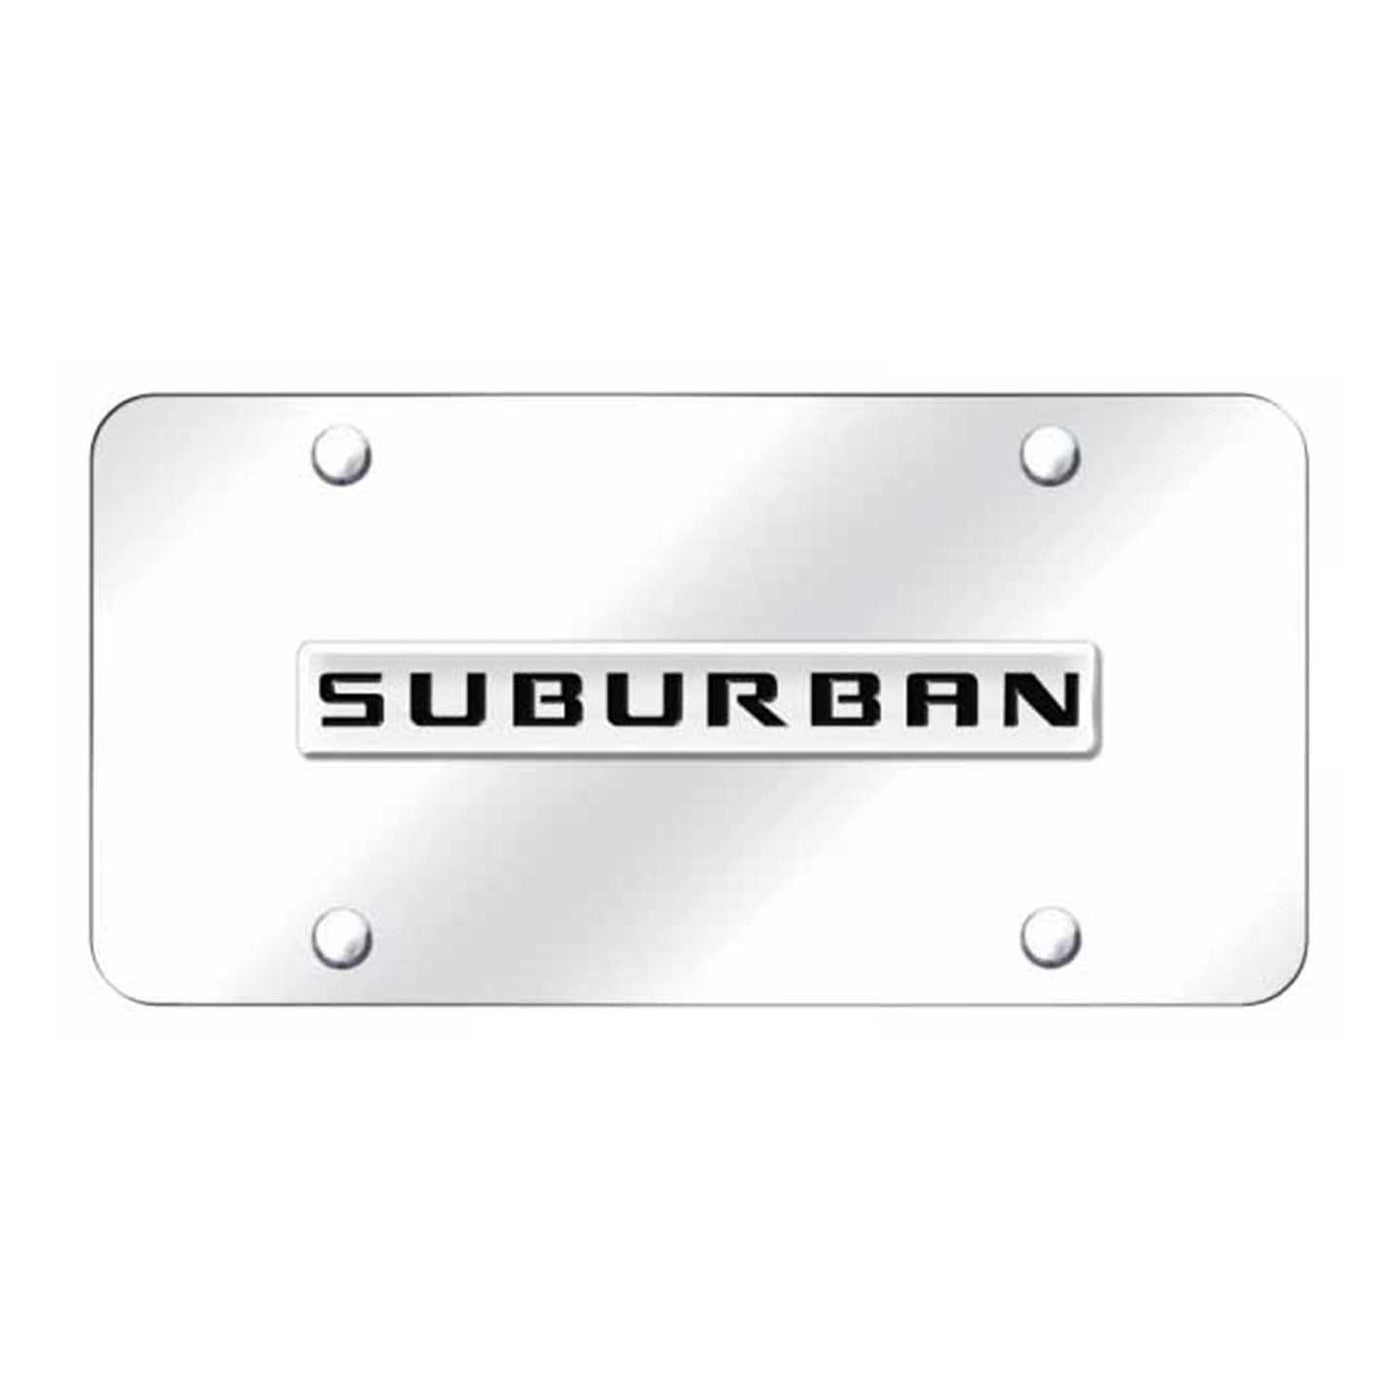 Suburban Name License Plate - Chrome on Mirrored